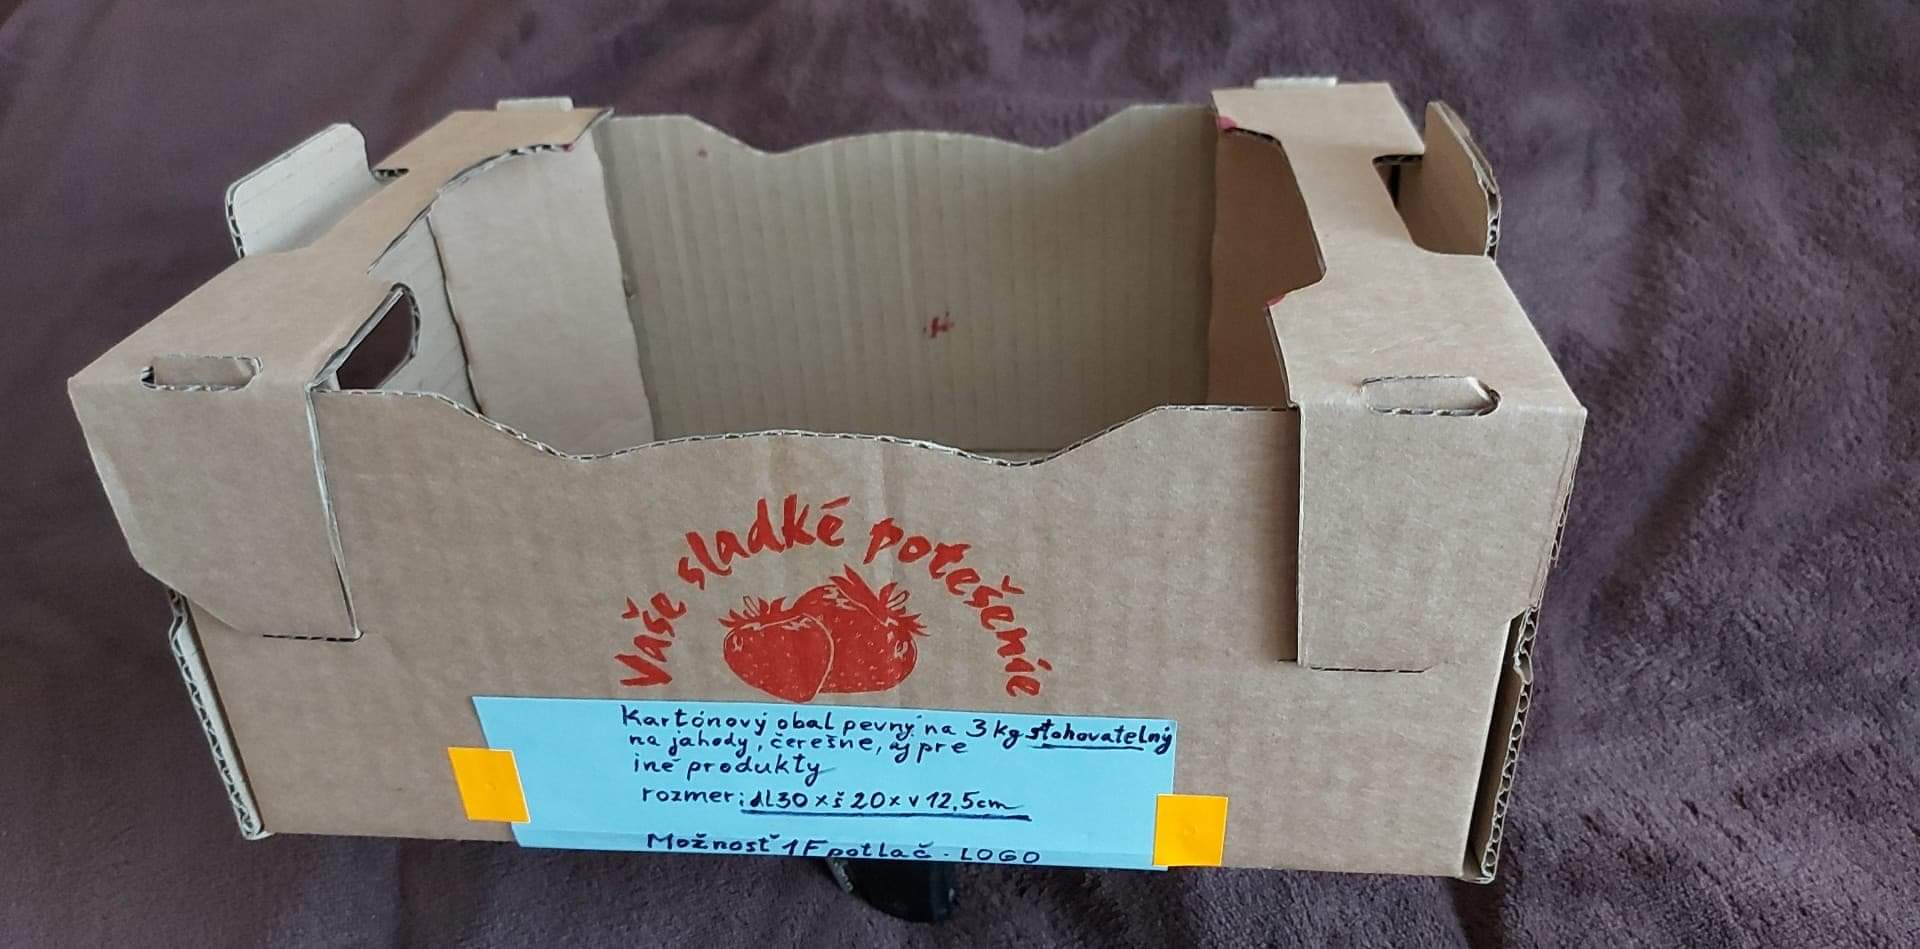 Krabica na jahody, čerešne 30 x 20 x 12,5 cm/ objem cca 3 kg/ 0,49 €